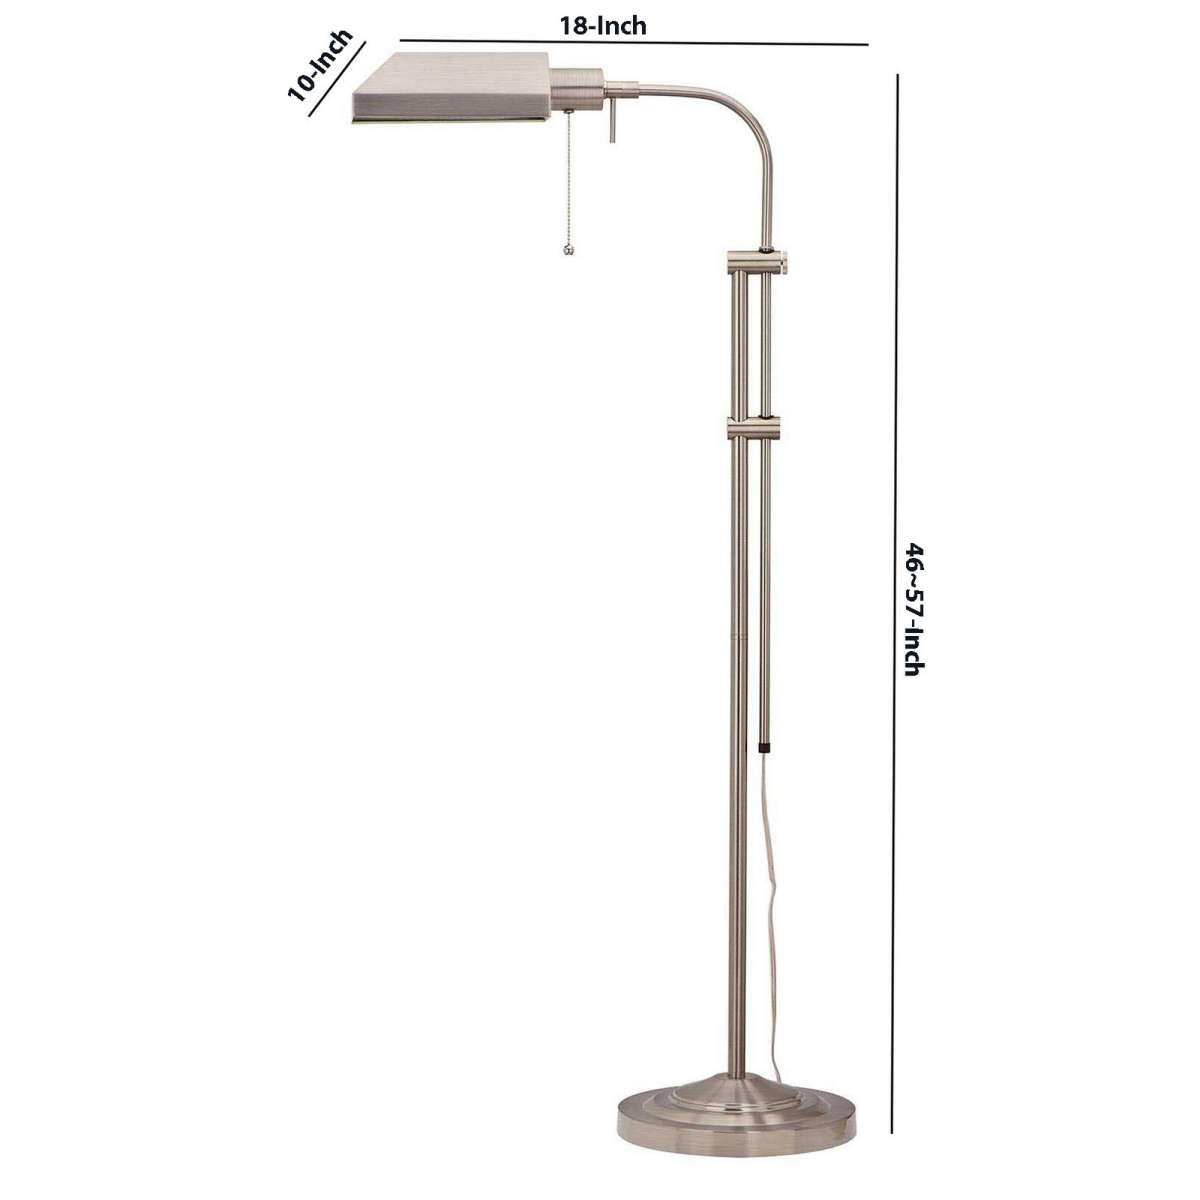 Metal Rectangular Floor Lamp With Adjustable Pole, White By Benzara